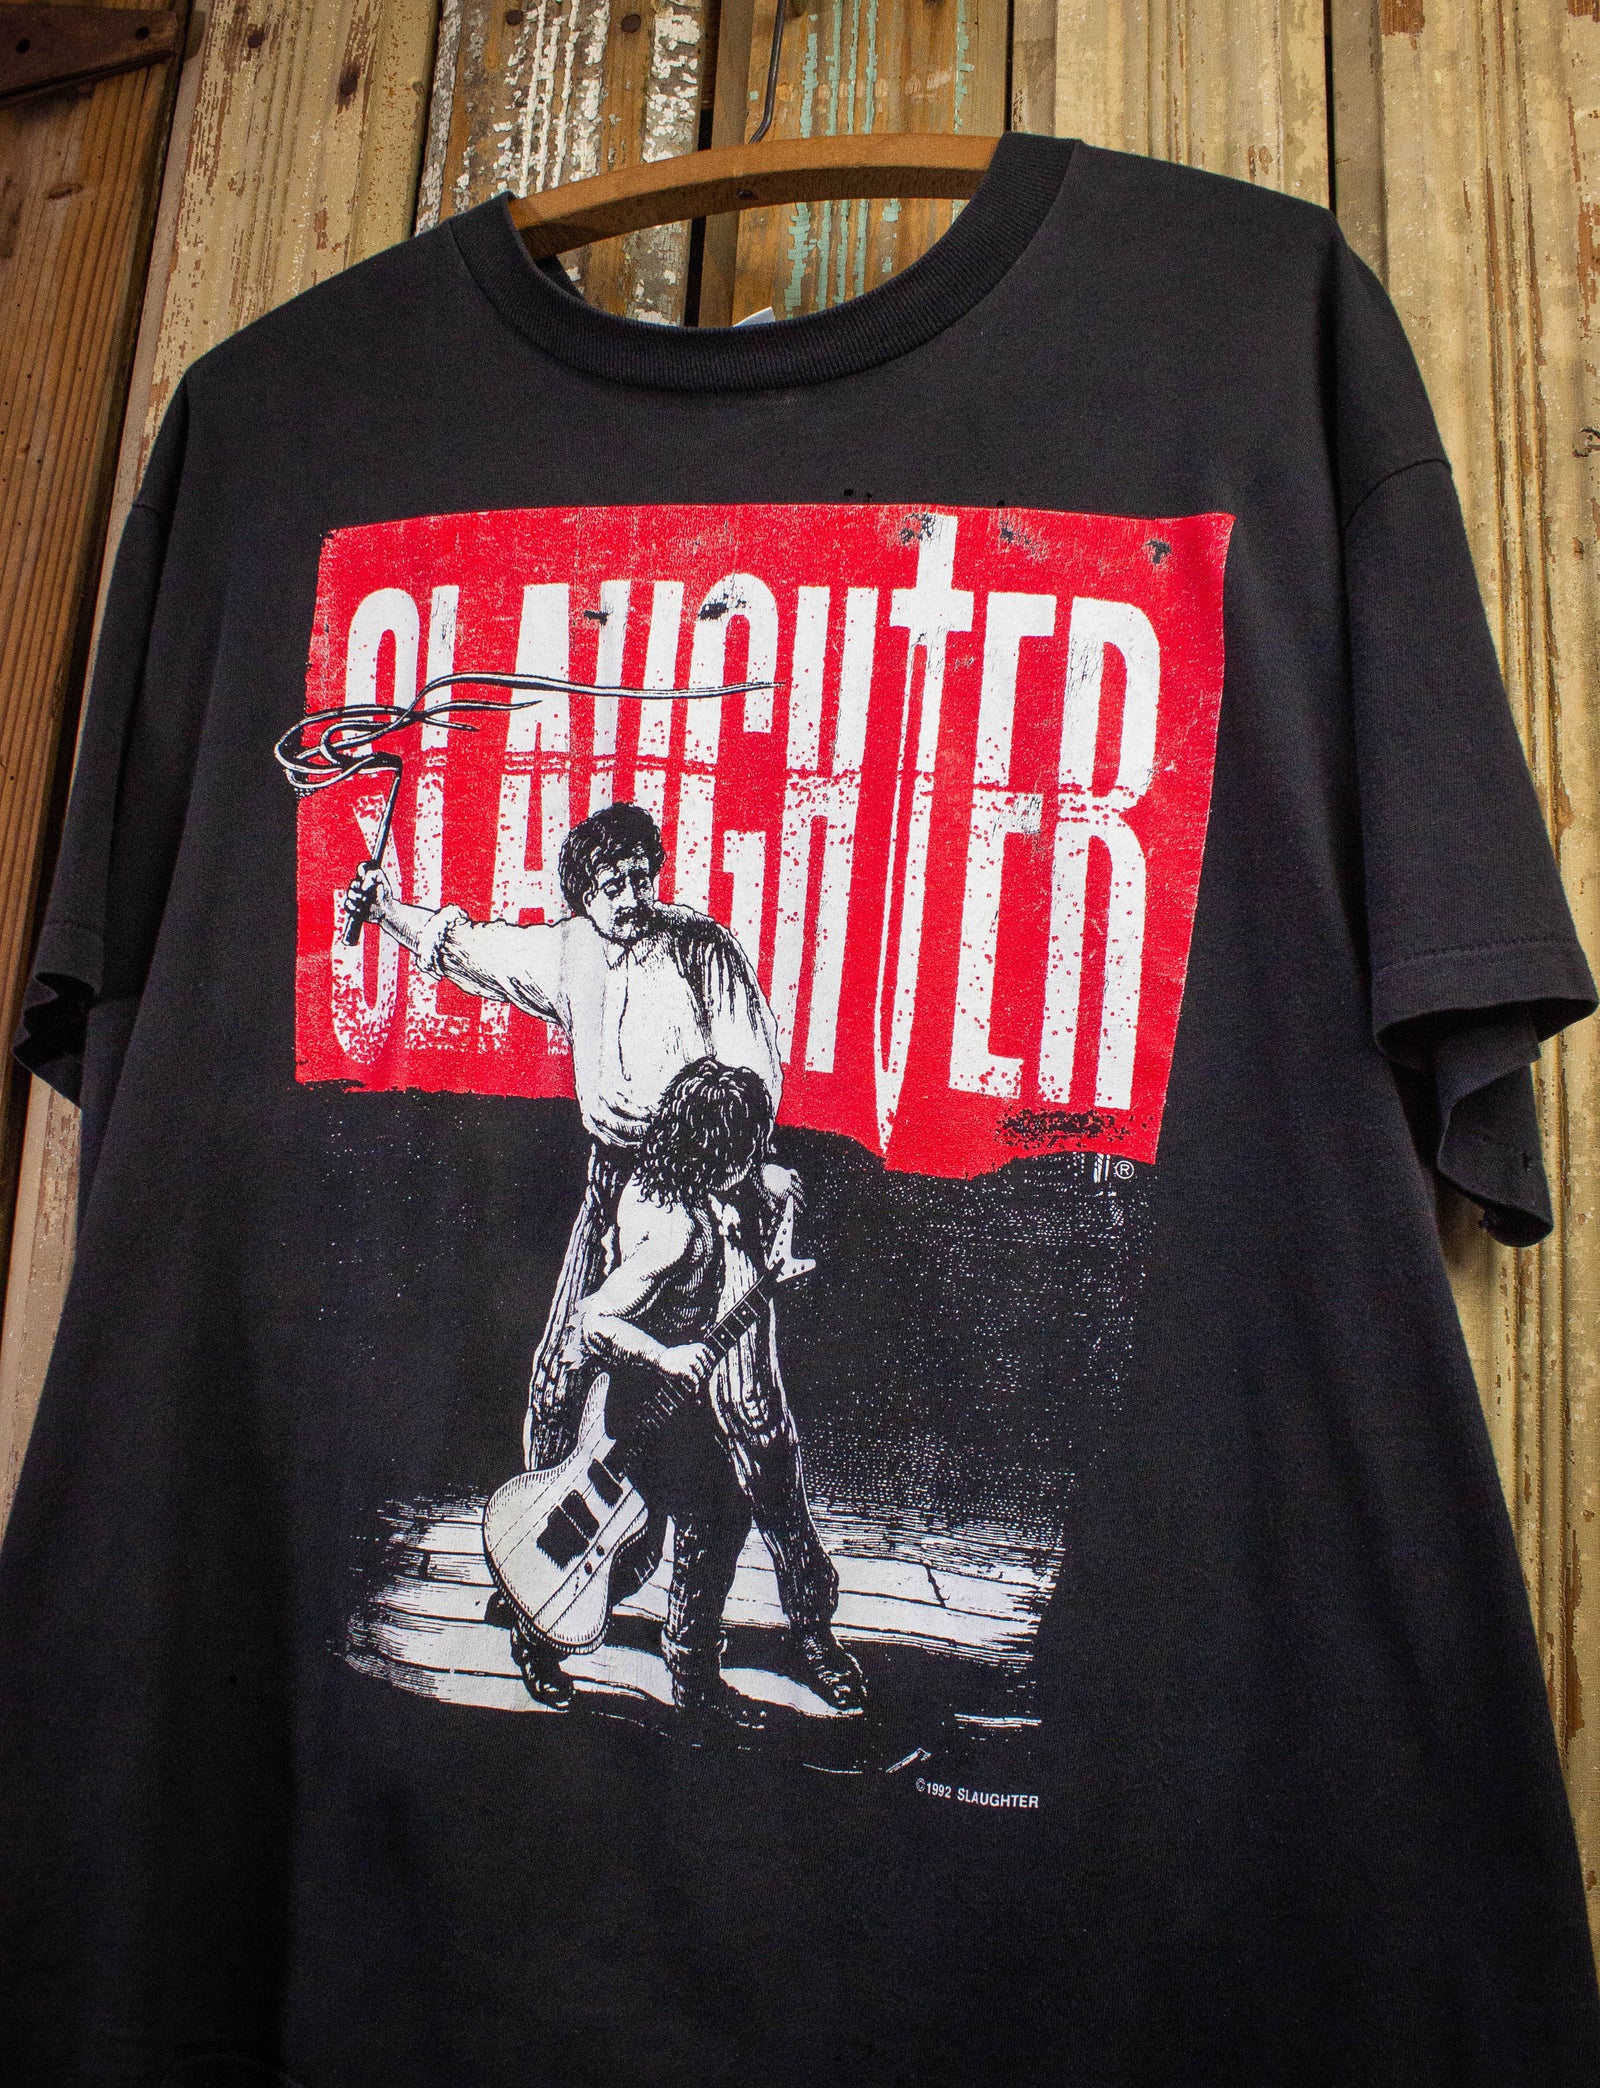 Vintage Slaughter The Wild Life Tour Concert T Shirt 1992-93 Black XL